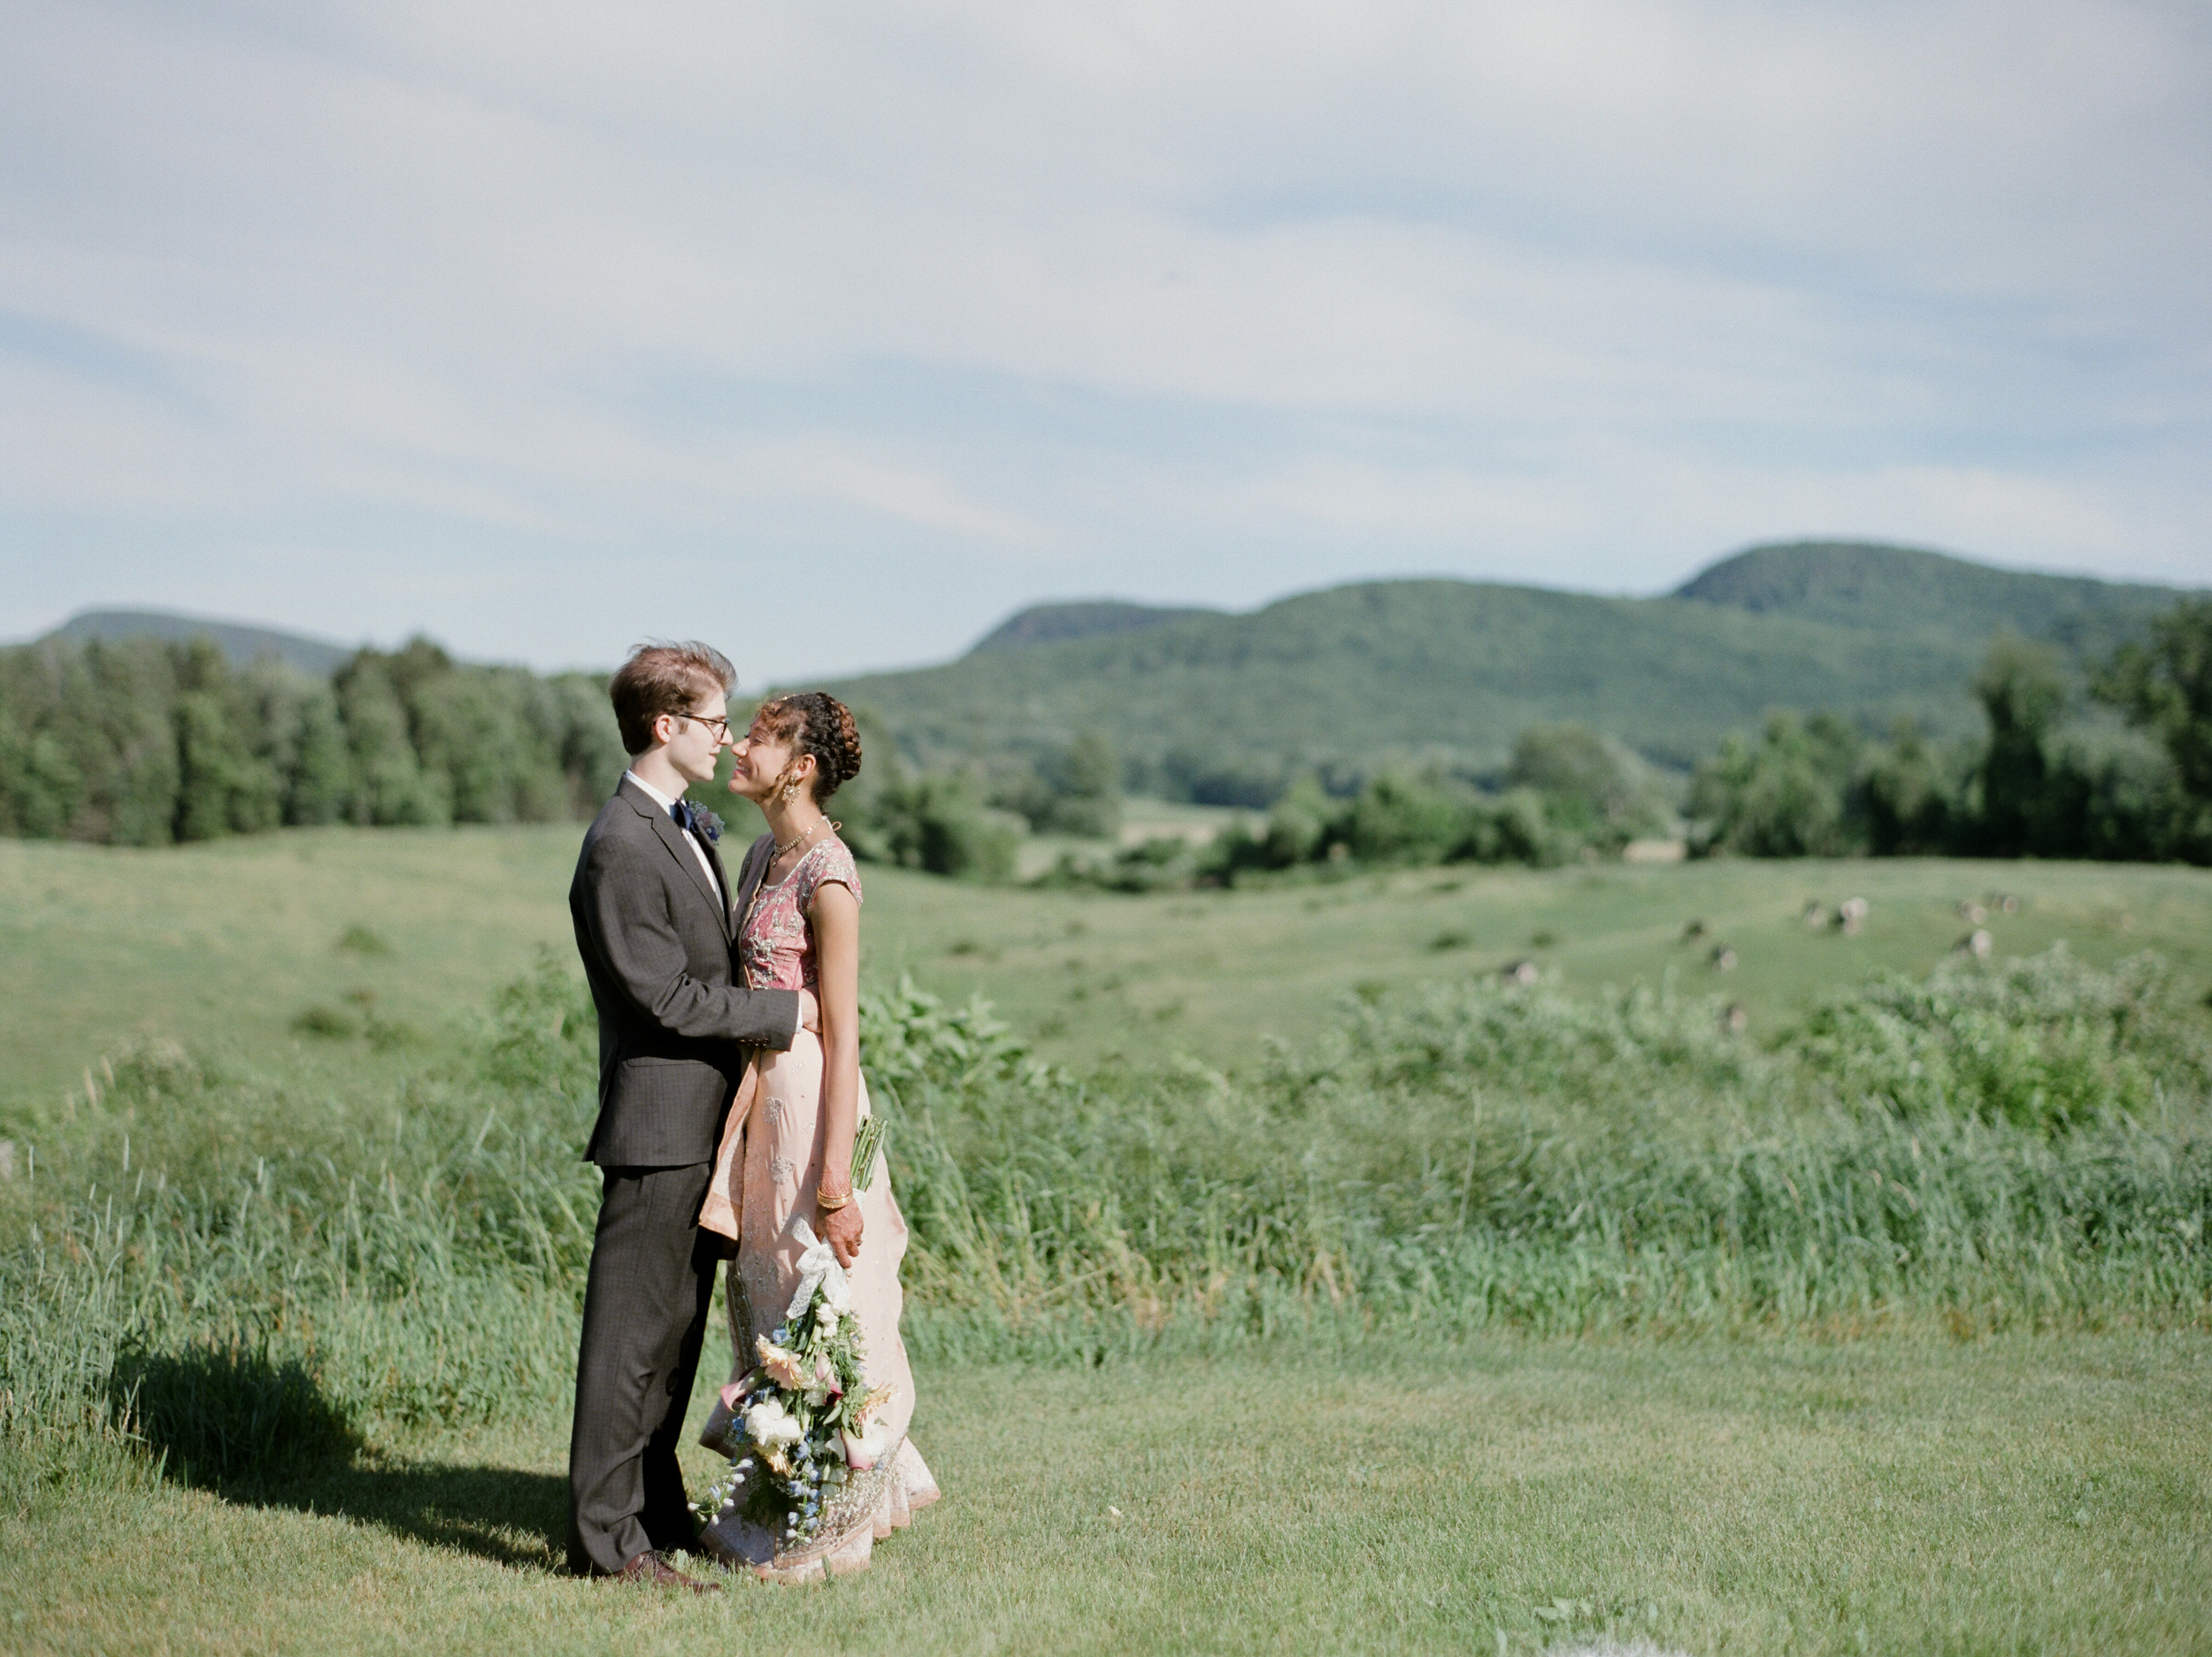 Fine art wedding photographer near the Berkshires